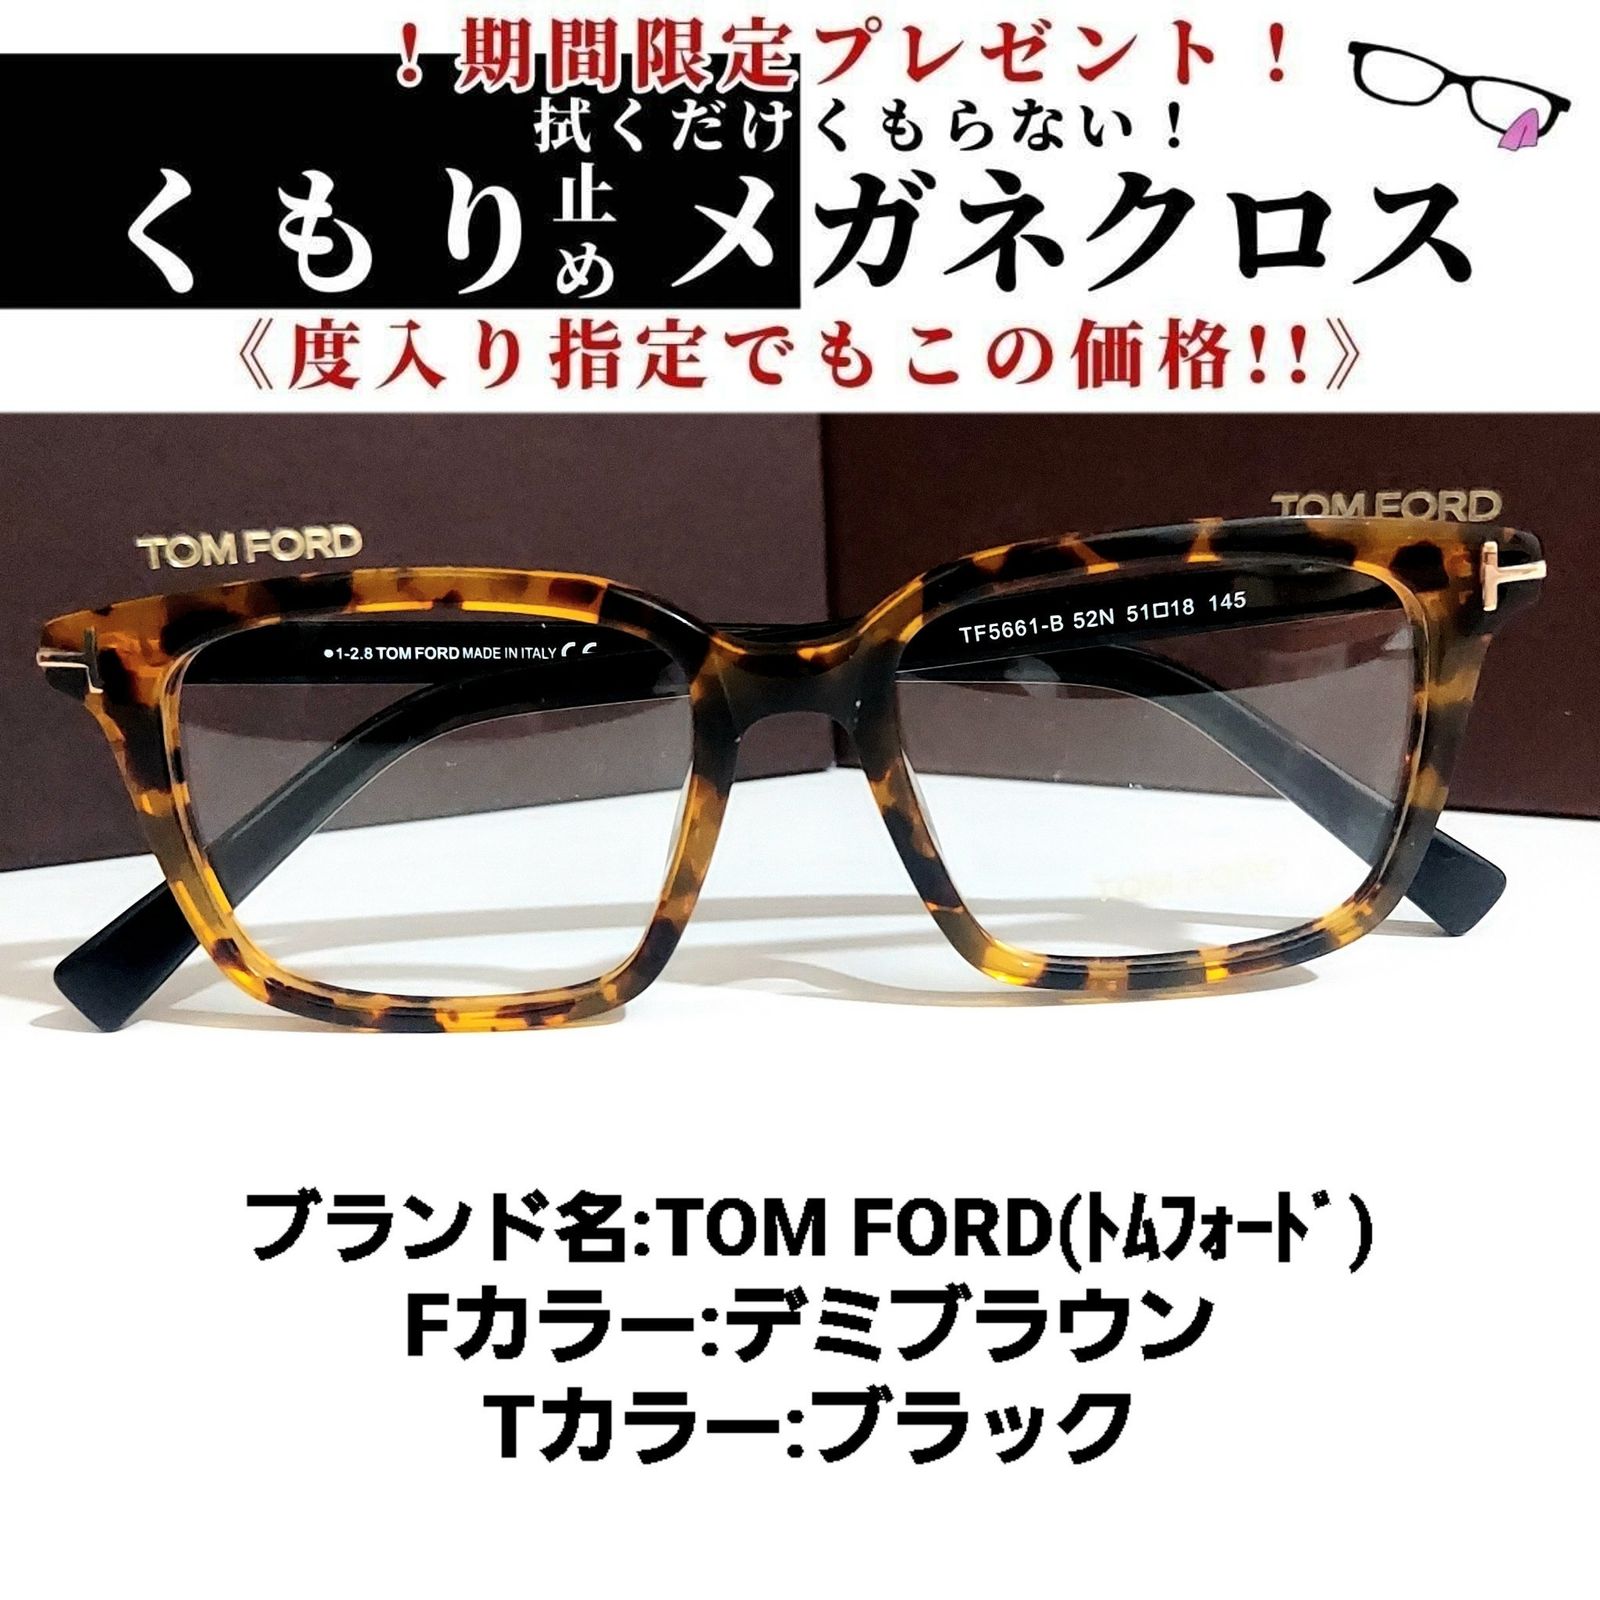 TOM FORD 正規品 トム フォード TF5207 005 茶 眼鏡フレーム-